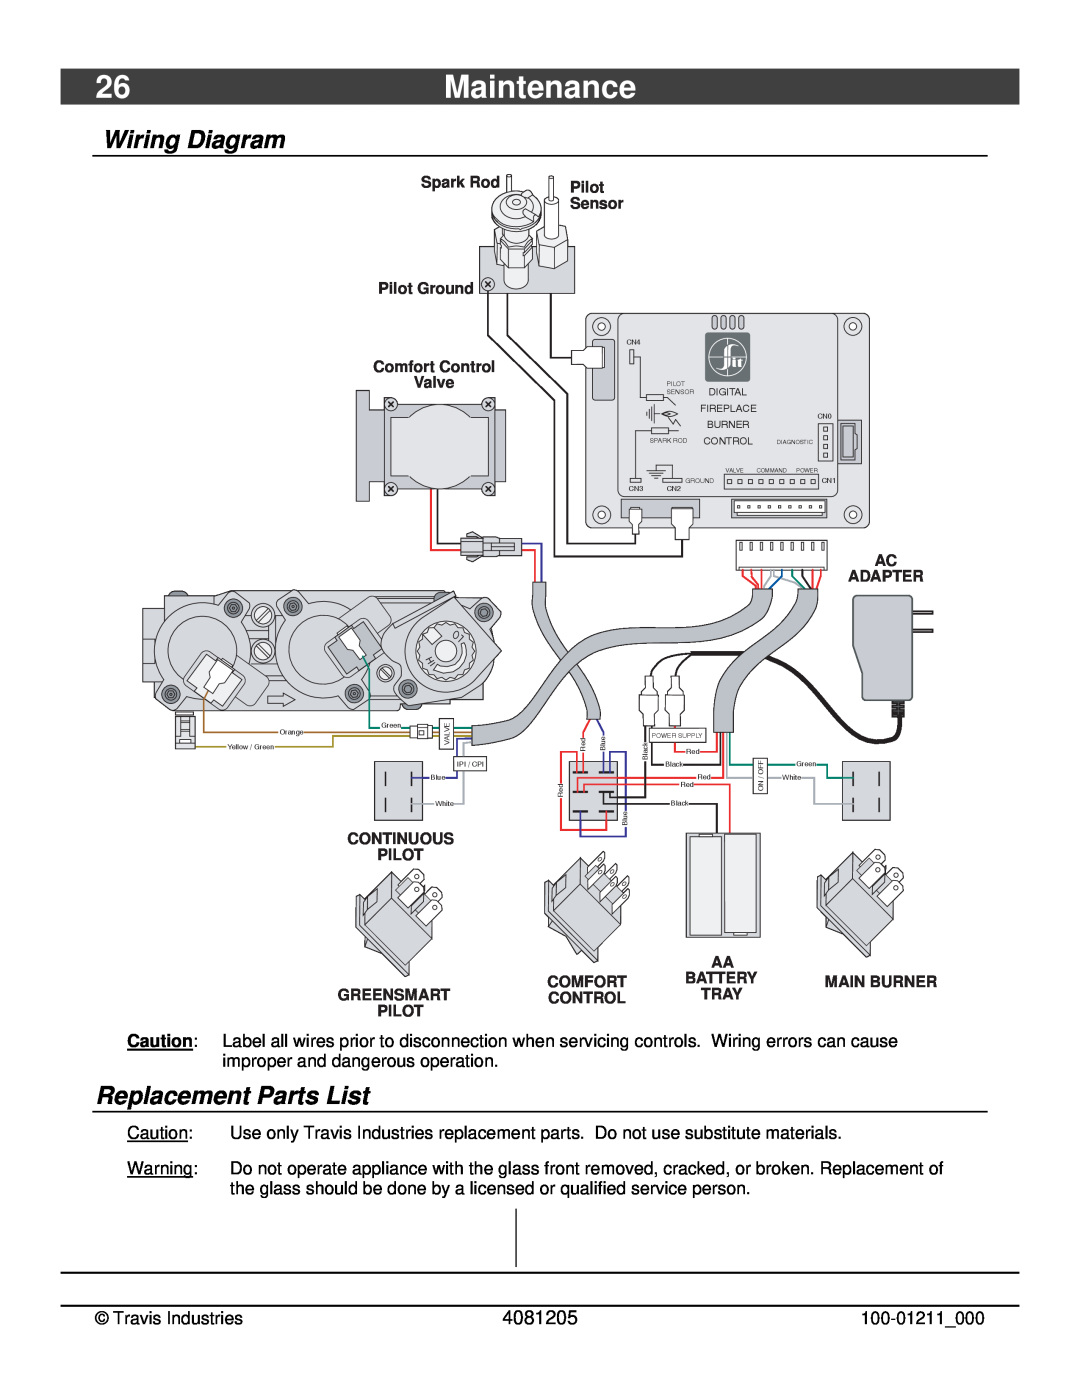 FireplaceXtrordinair 564 owner manual 26Maintenance, Wiring Diagram, Replacement Parts List, 4081205 